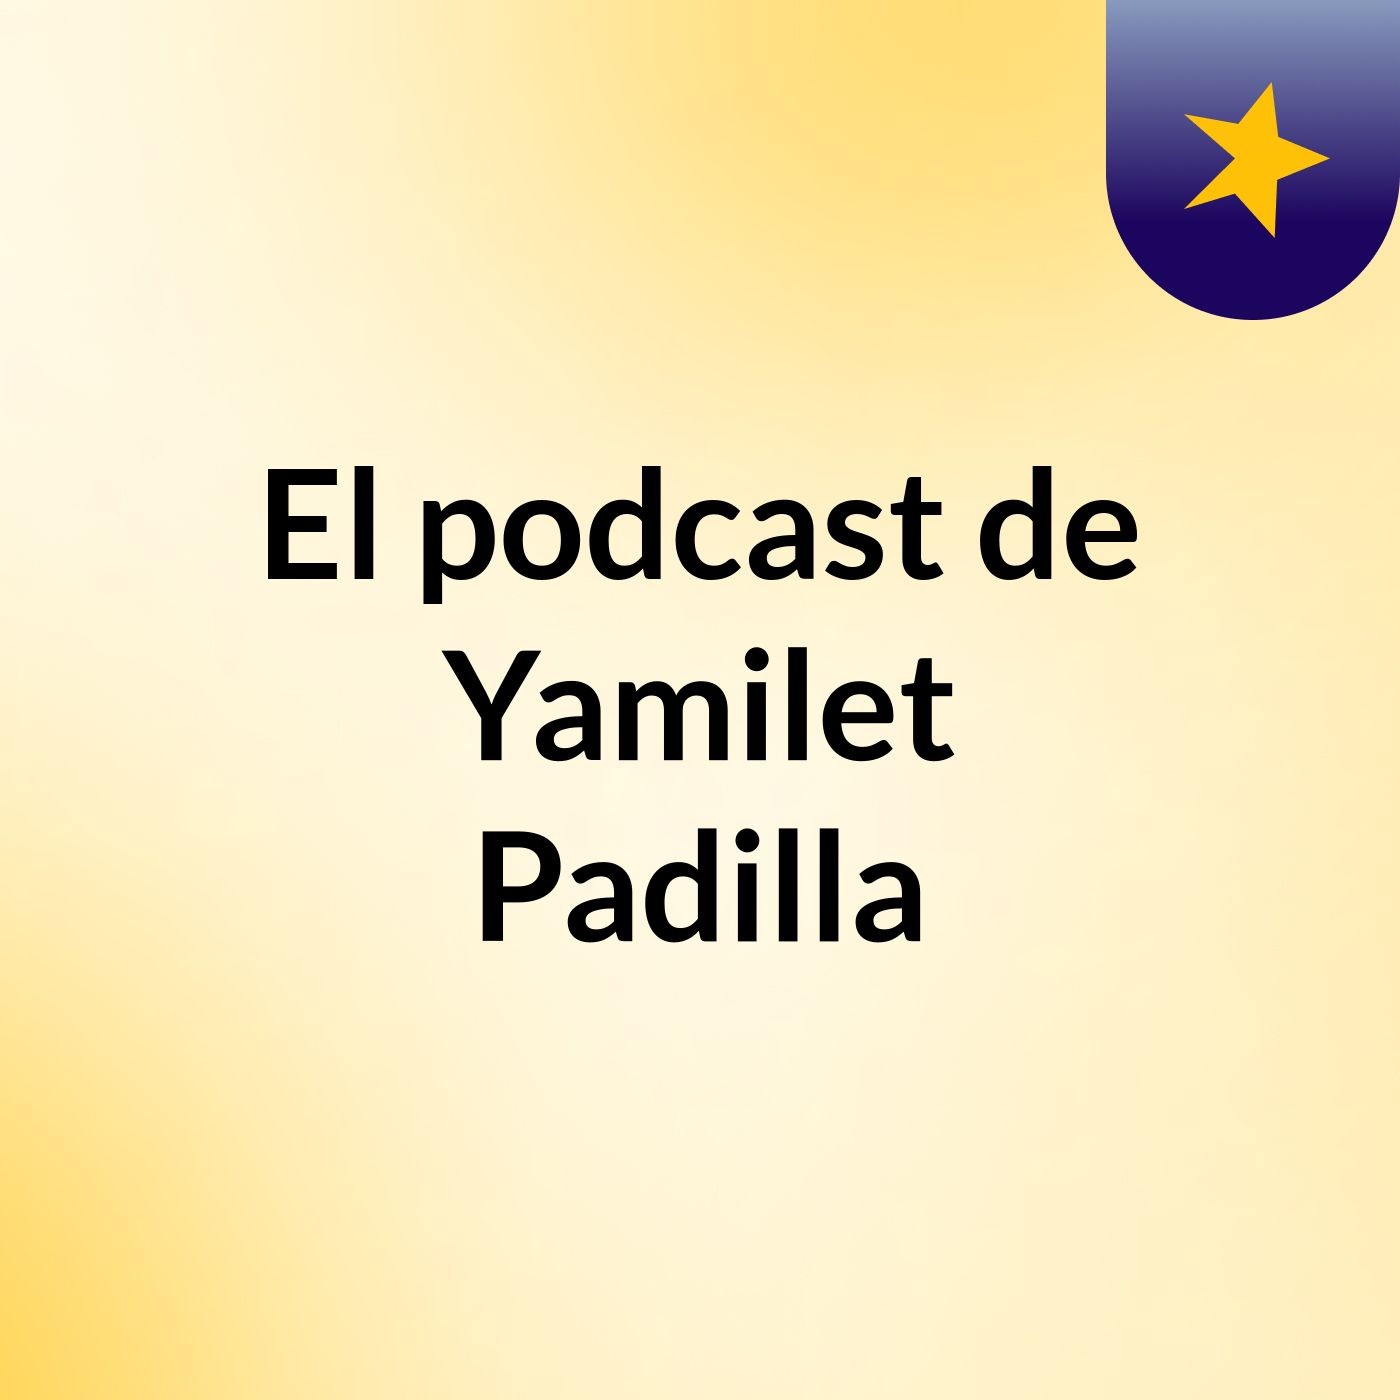 El podcast de Yamilet Padilla